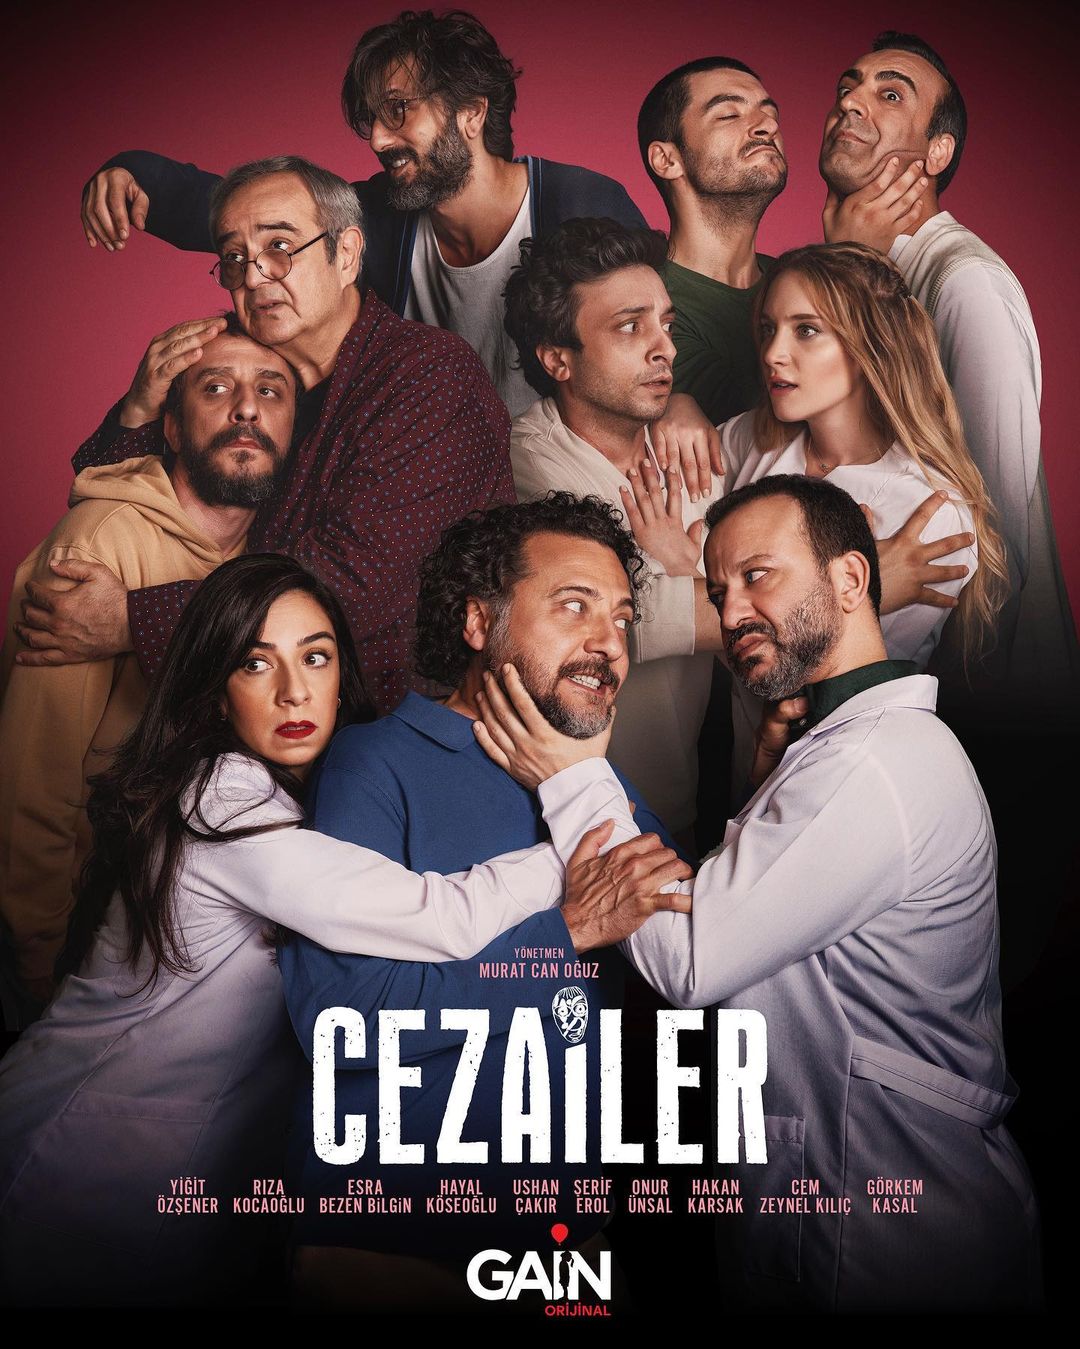 TV ratings for Cezailer in the United Kingdom. Gain TV series